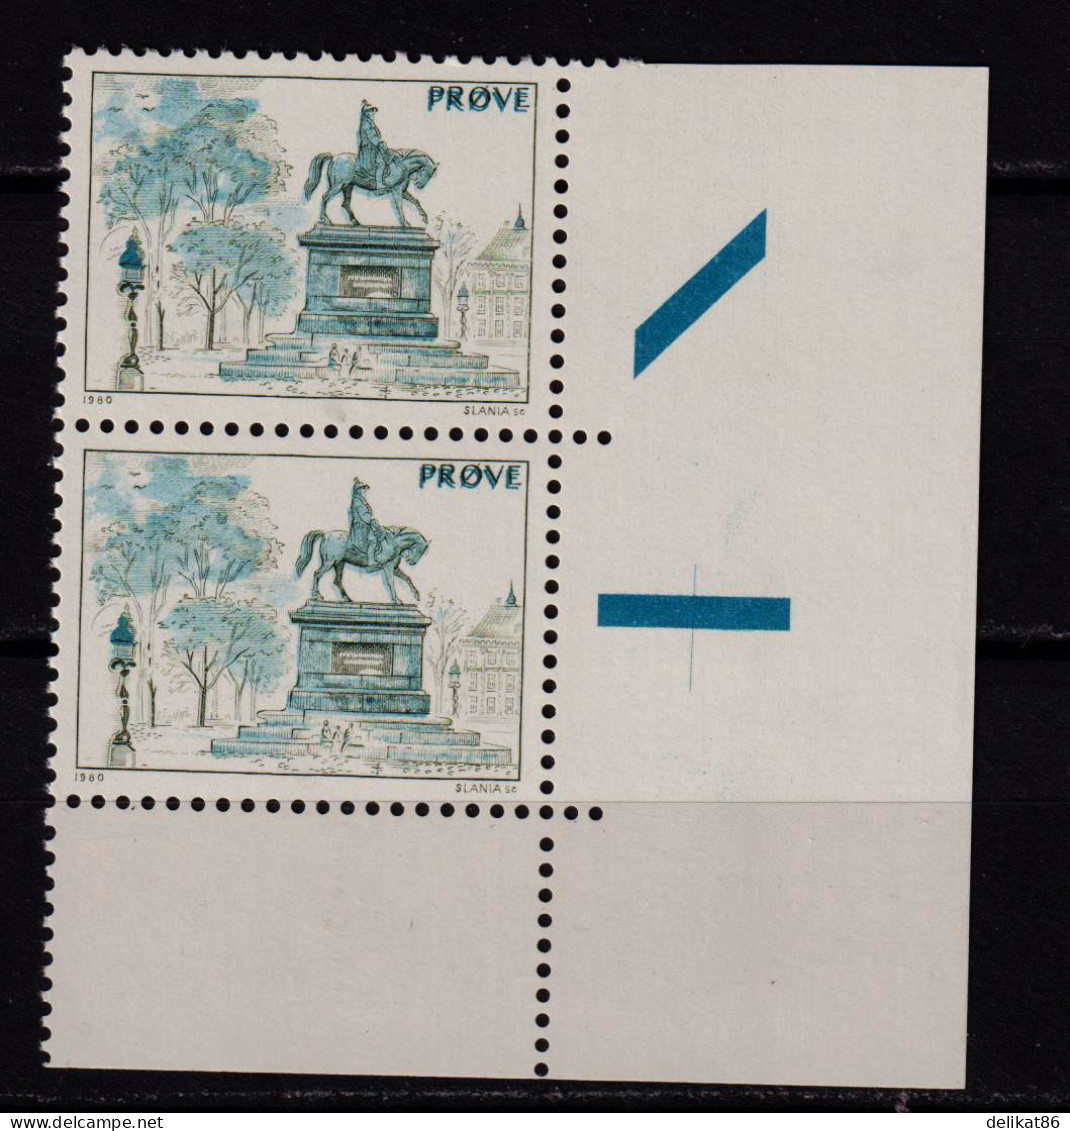 Test Stamp, Specimen, Prove, Probedruck, Reiterstandbild, Slania 1980 - 1985 Doppelmarke Unterere Rand - Proofs & Reprints